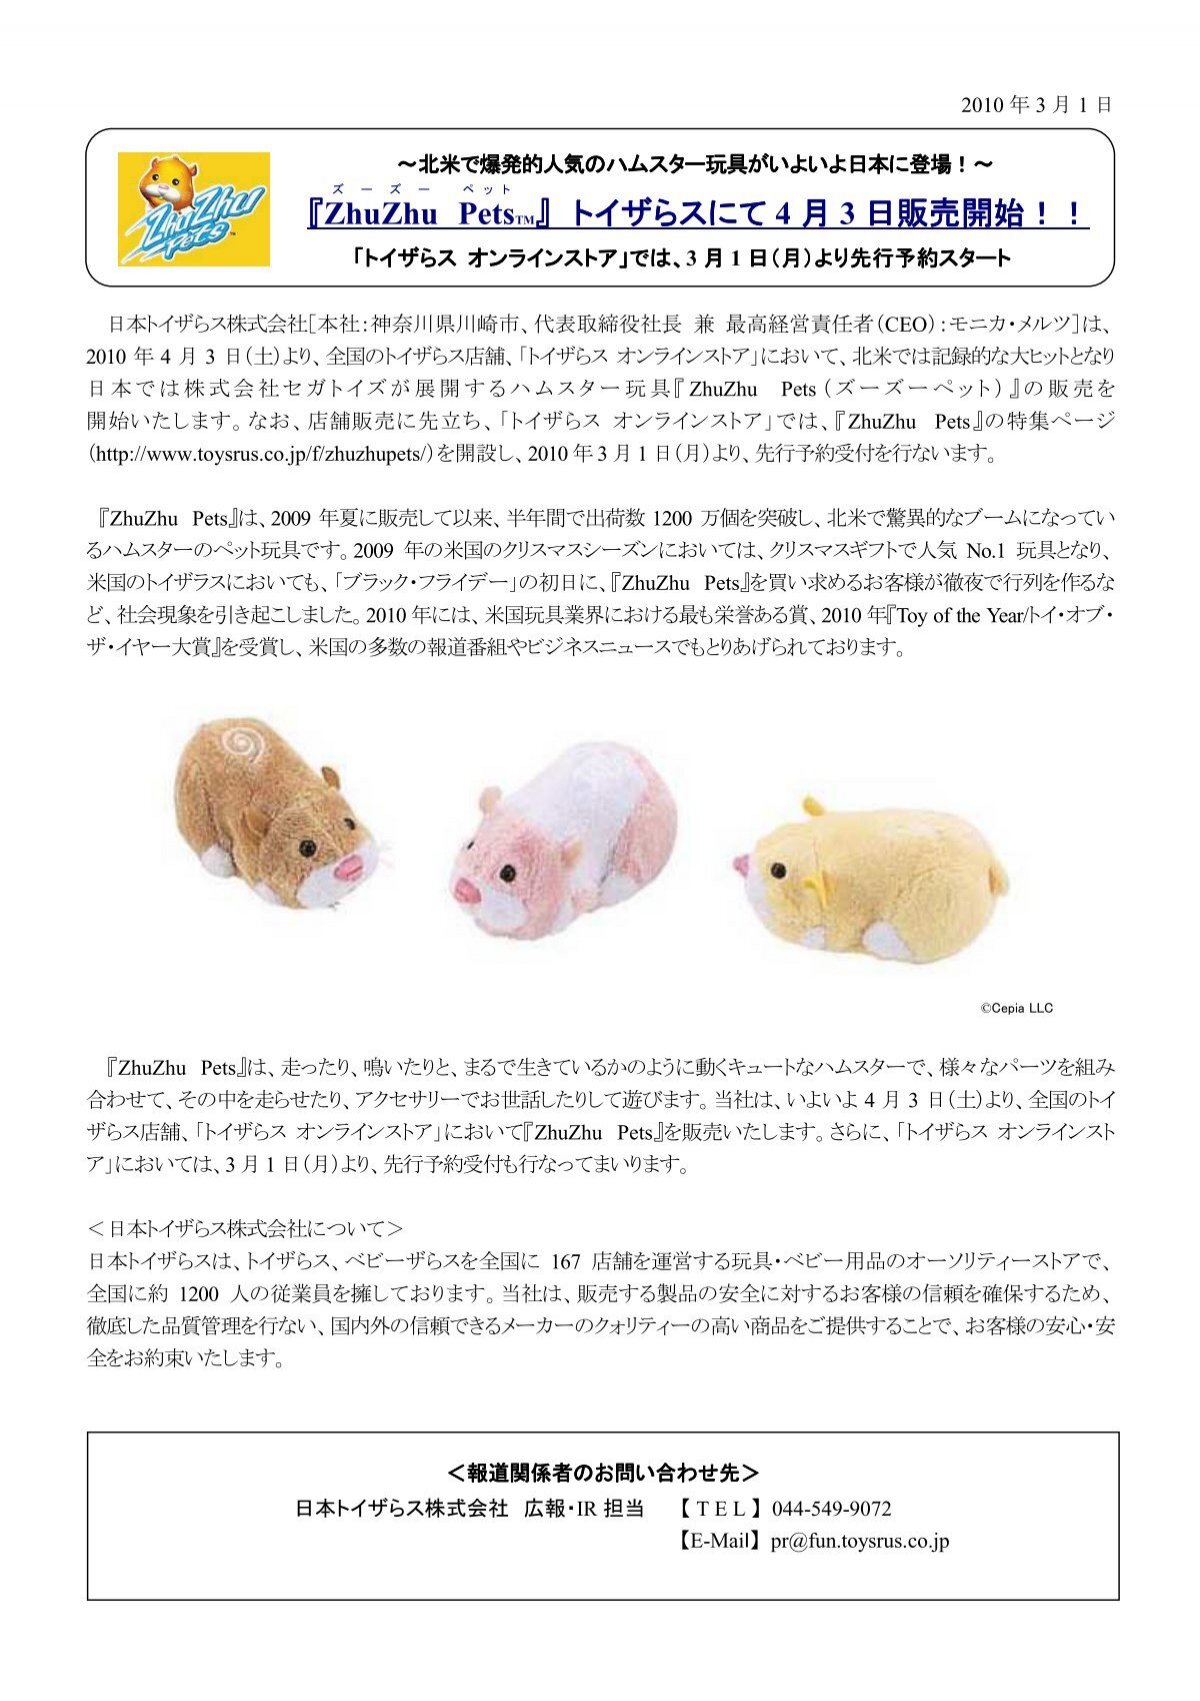 Zhuzhu Pets Tm トイザらスにて 4 月 3 日販売開始